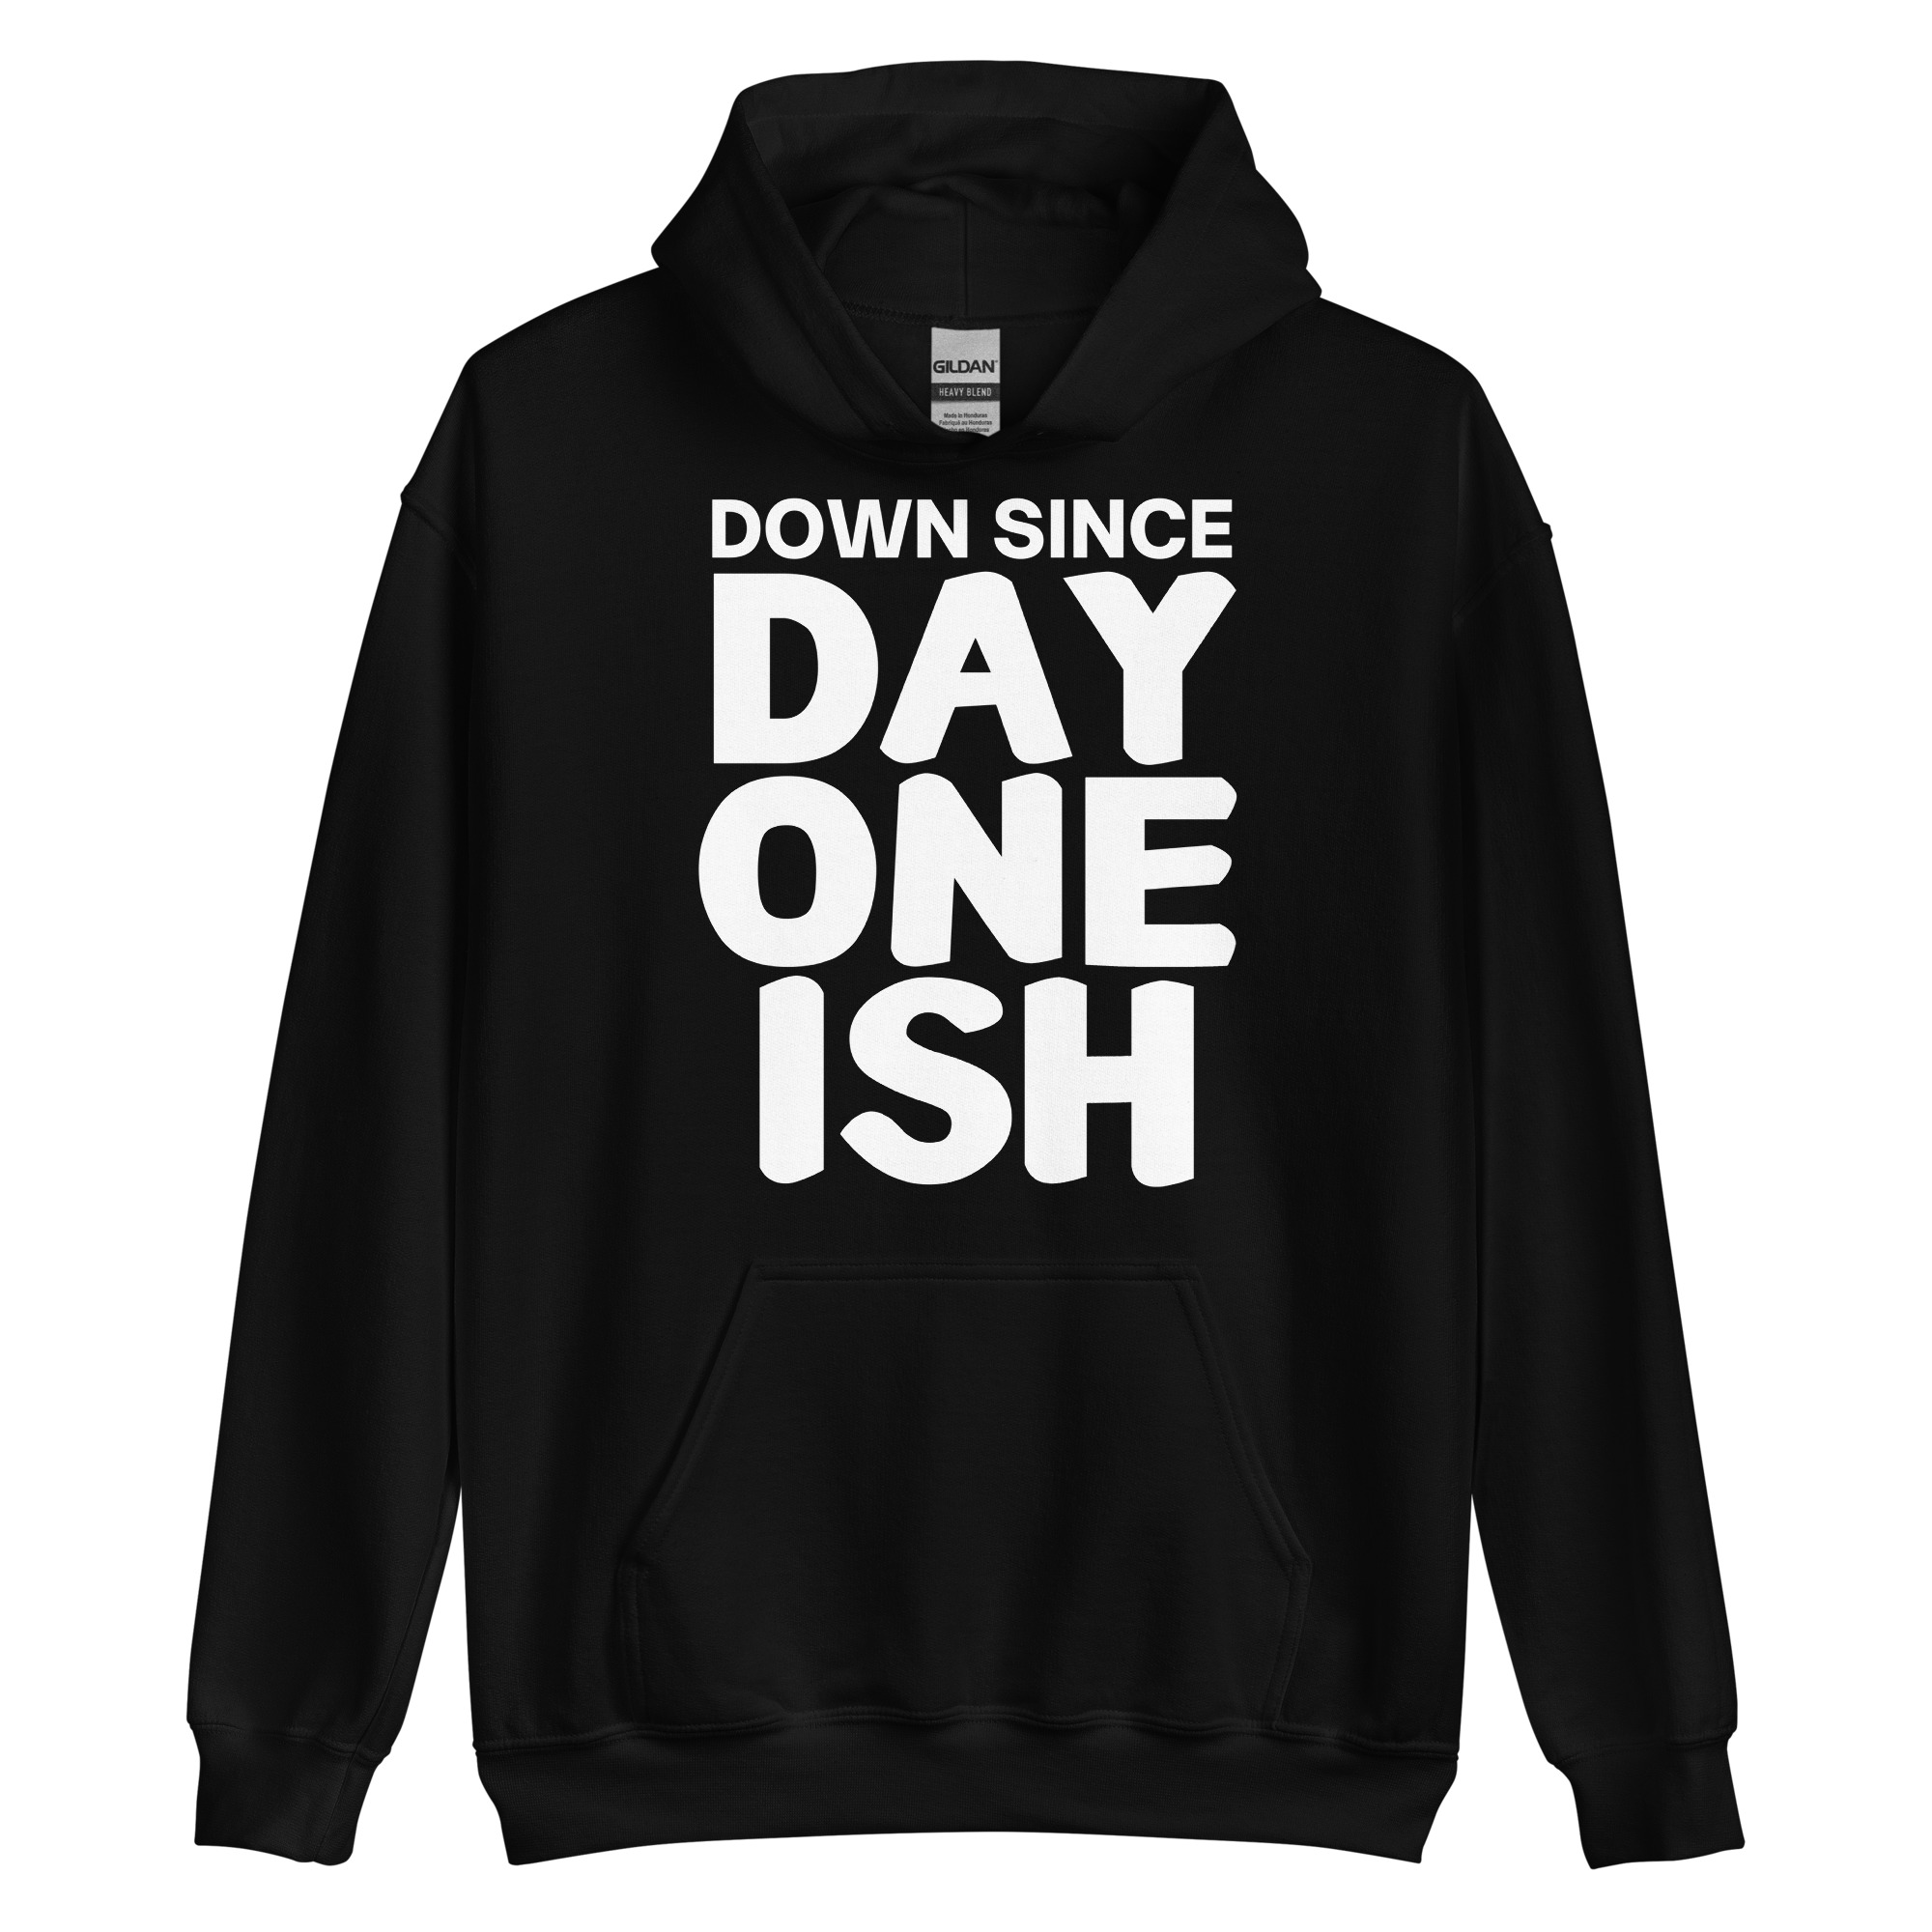 Down Since Day One Ish hoodie - PYGear.com